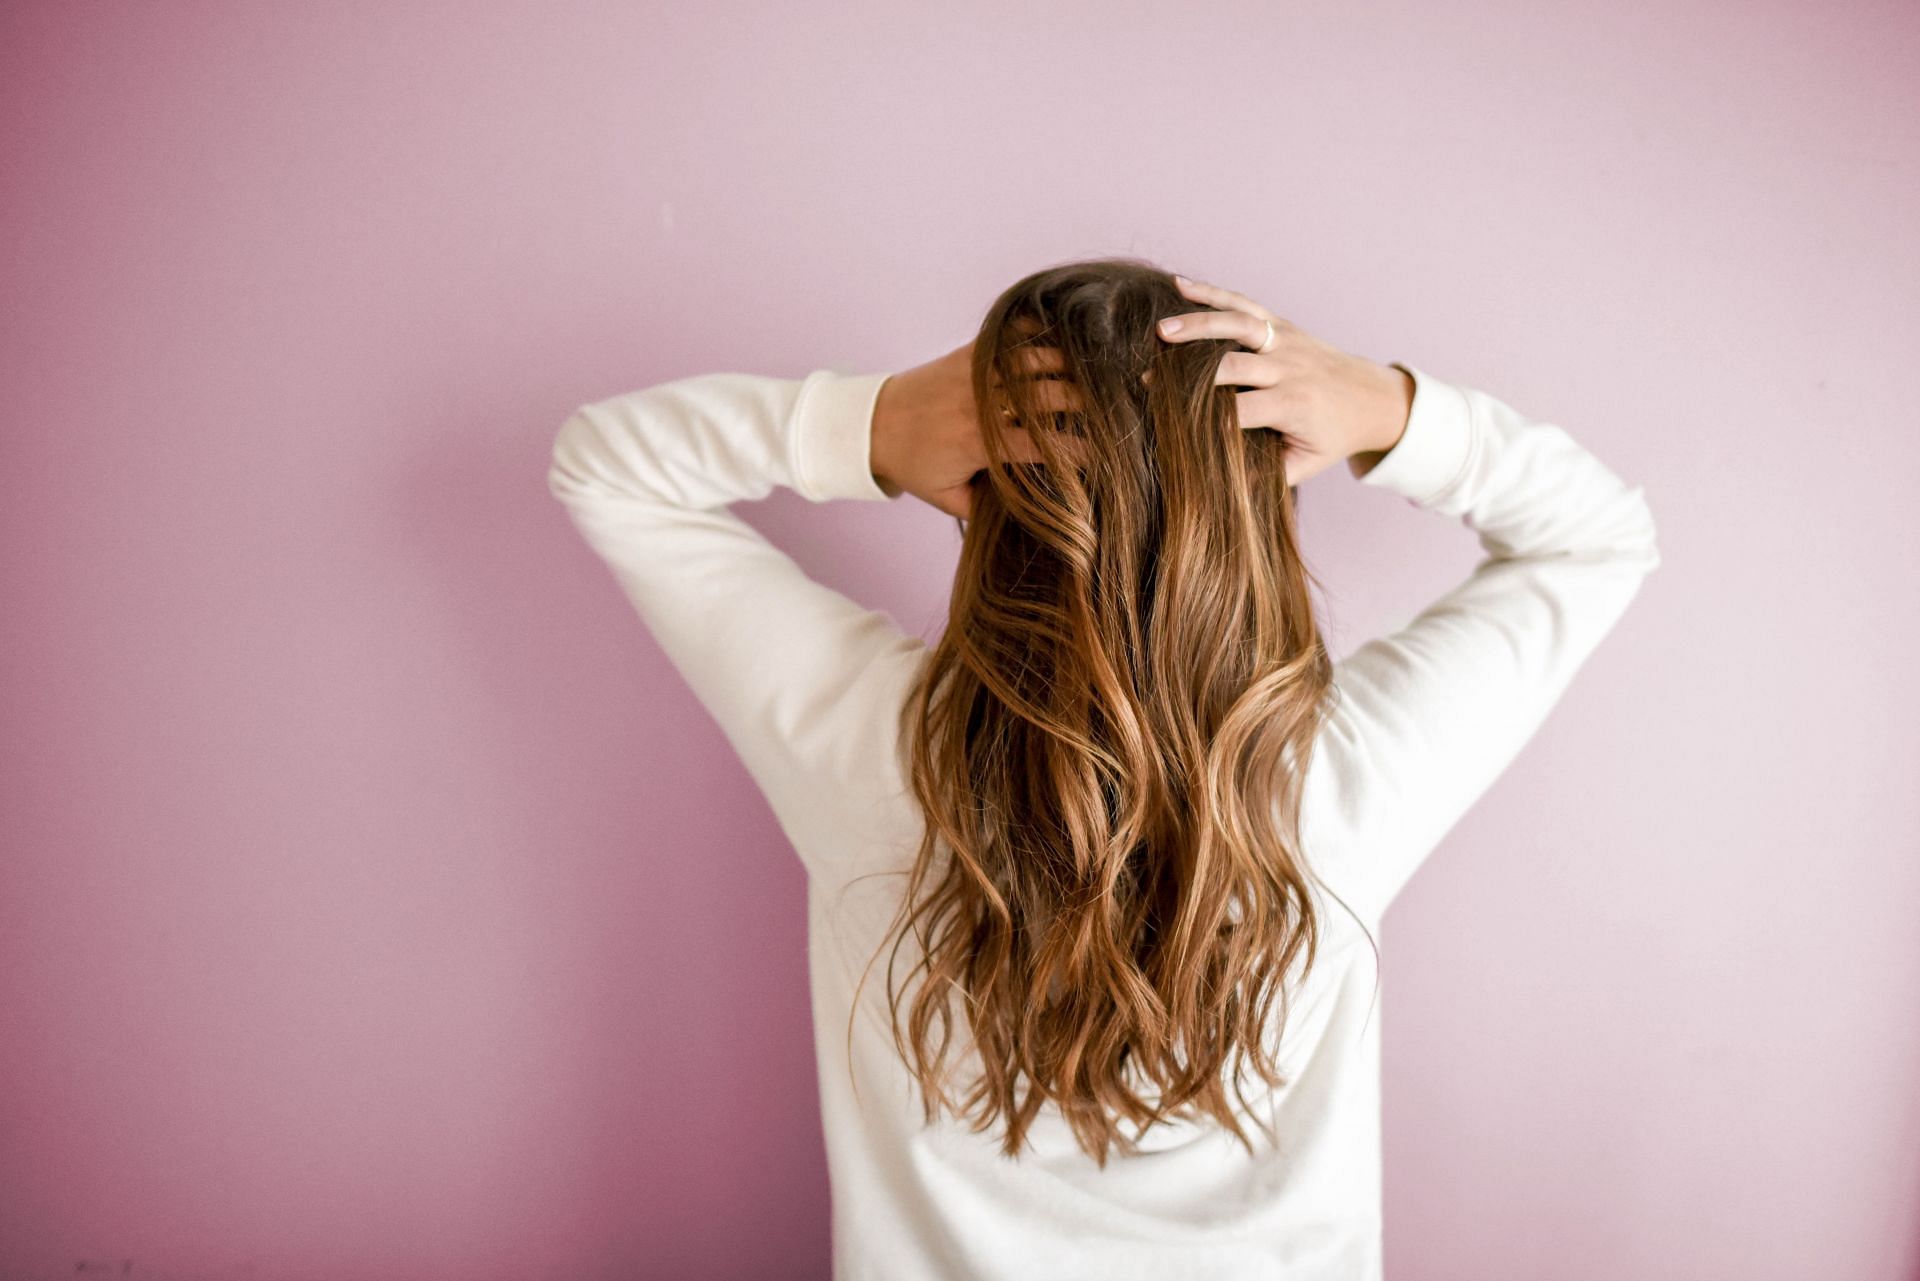 Got ingrown scalp hair? We have a few ways you can prevent it. (Image via pexels/Element Digital)